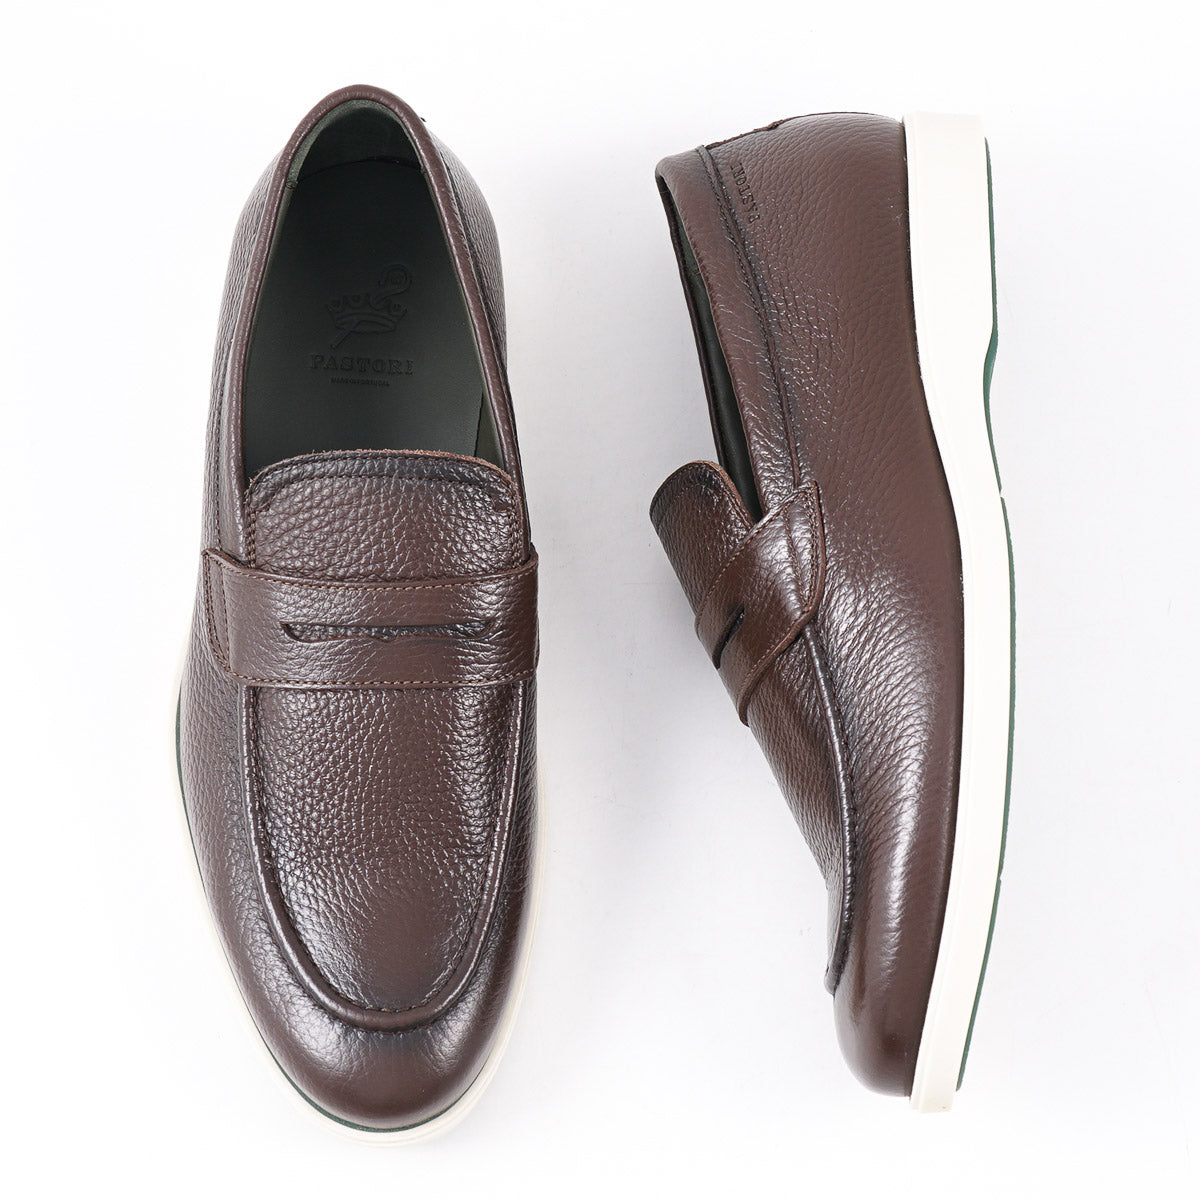 Pastori 'Valerian' Leather Sport Loafer - Top Shelf Apparel